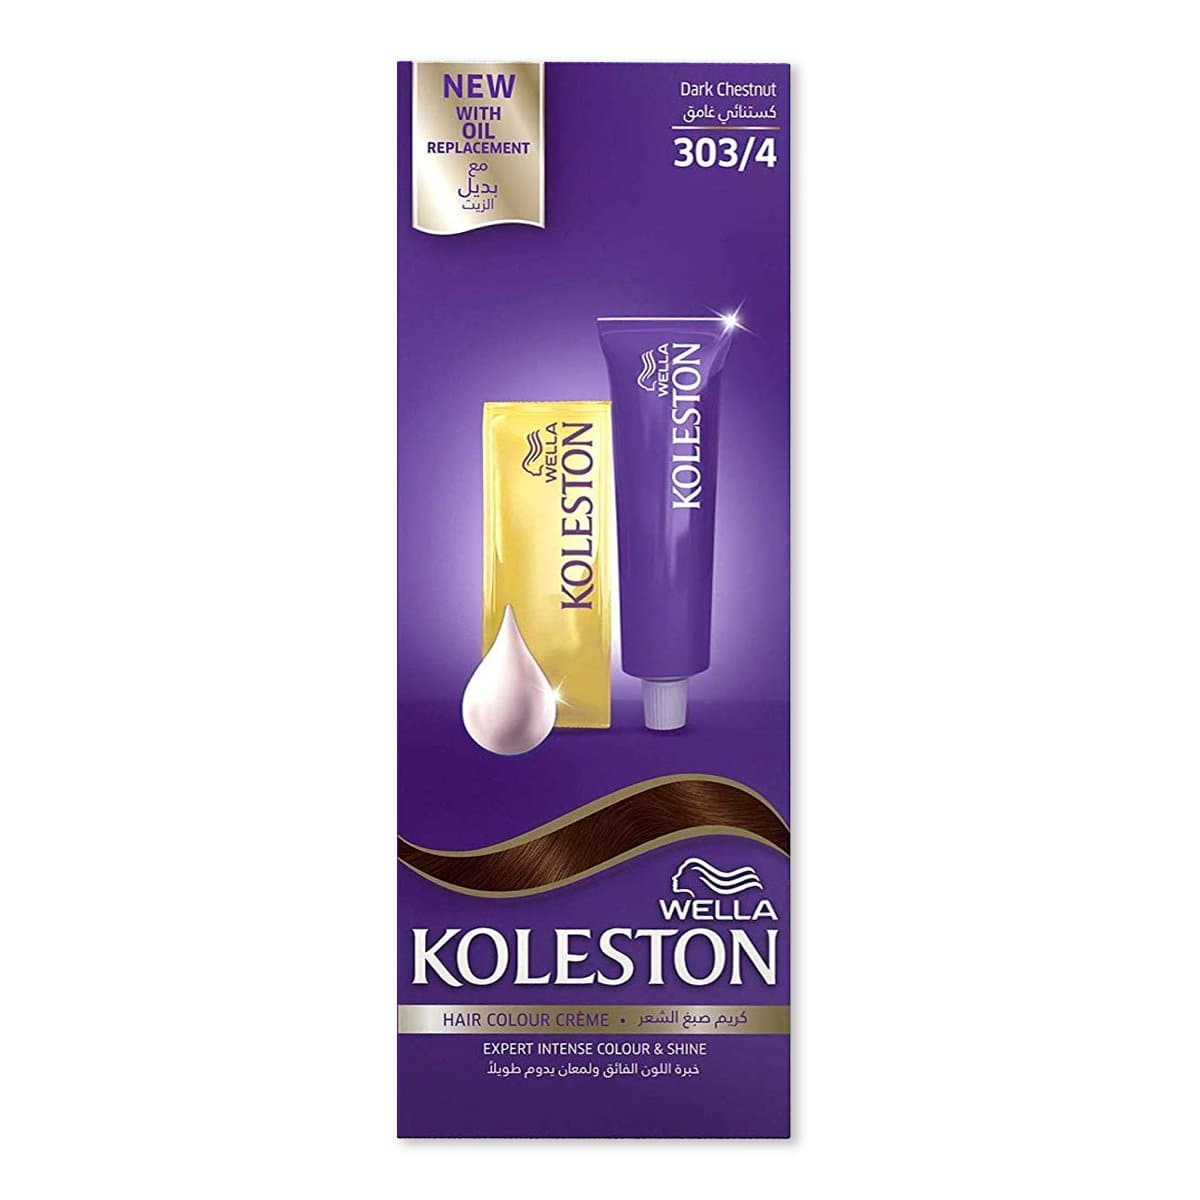 Wella Koleston - Hair Colour Cream 303/4 Dark Chestnut - Highfy.pk